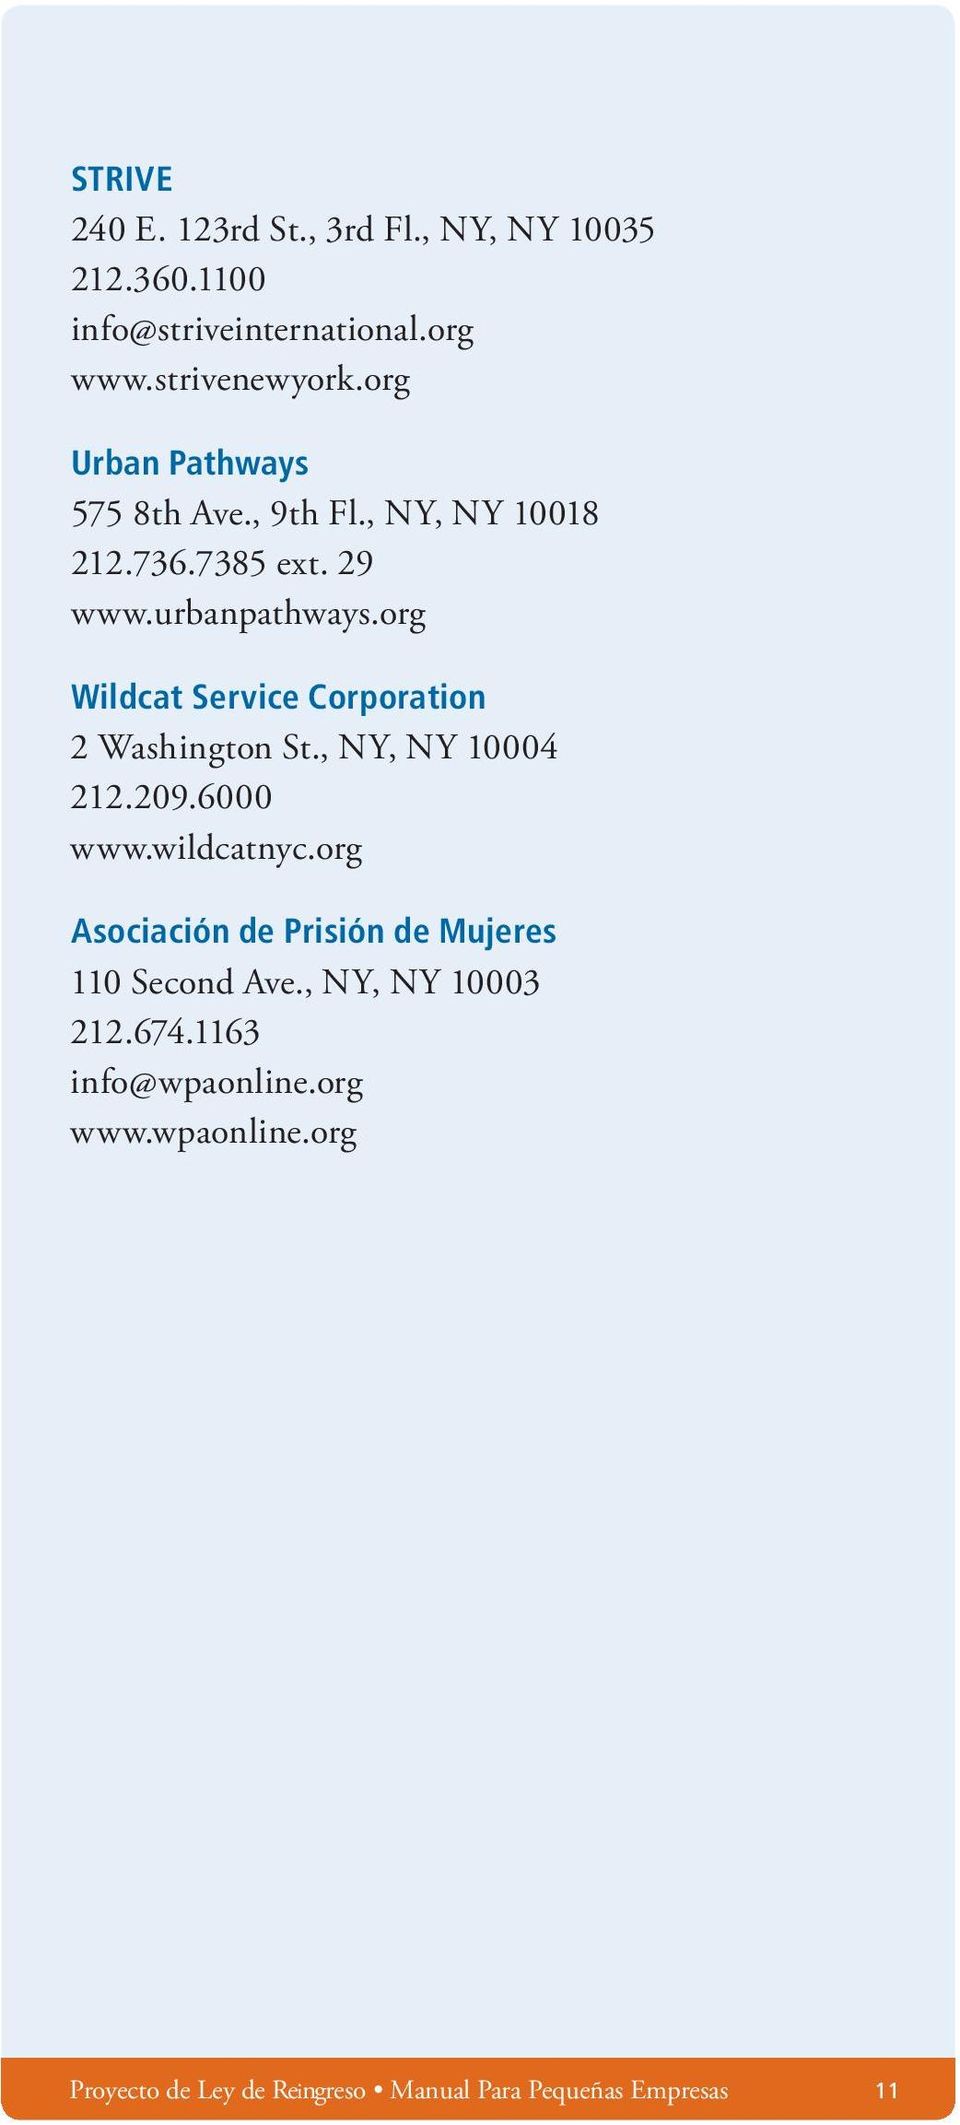 org Wildcat Service Corporation 2 Washington St., NY, NY 10004 212.209.6000 www.wildcatnyc.